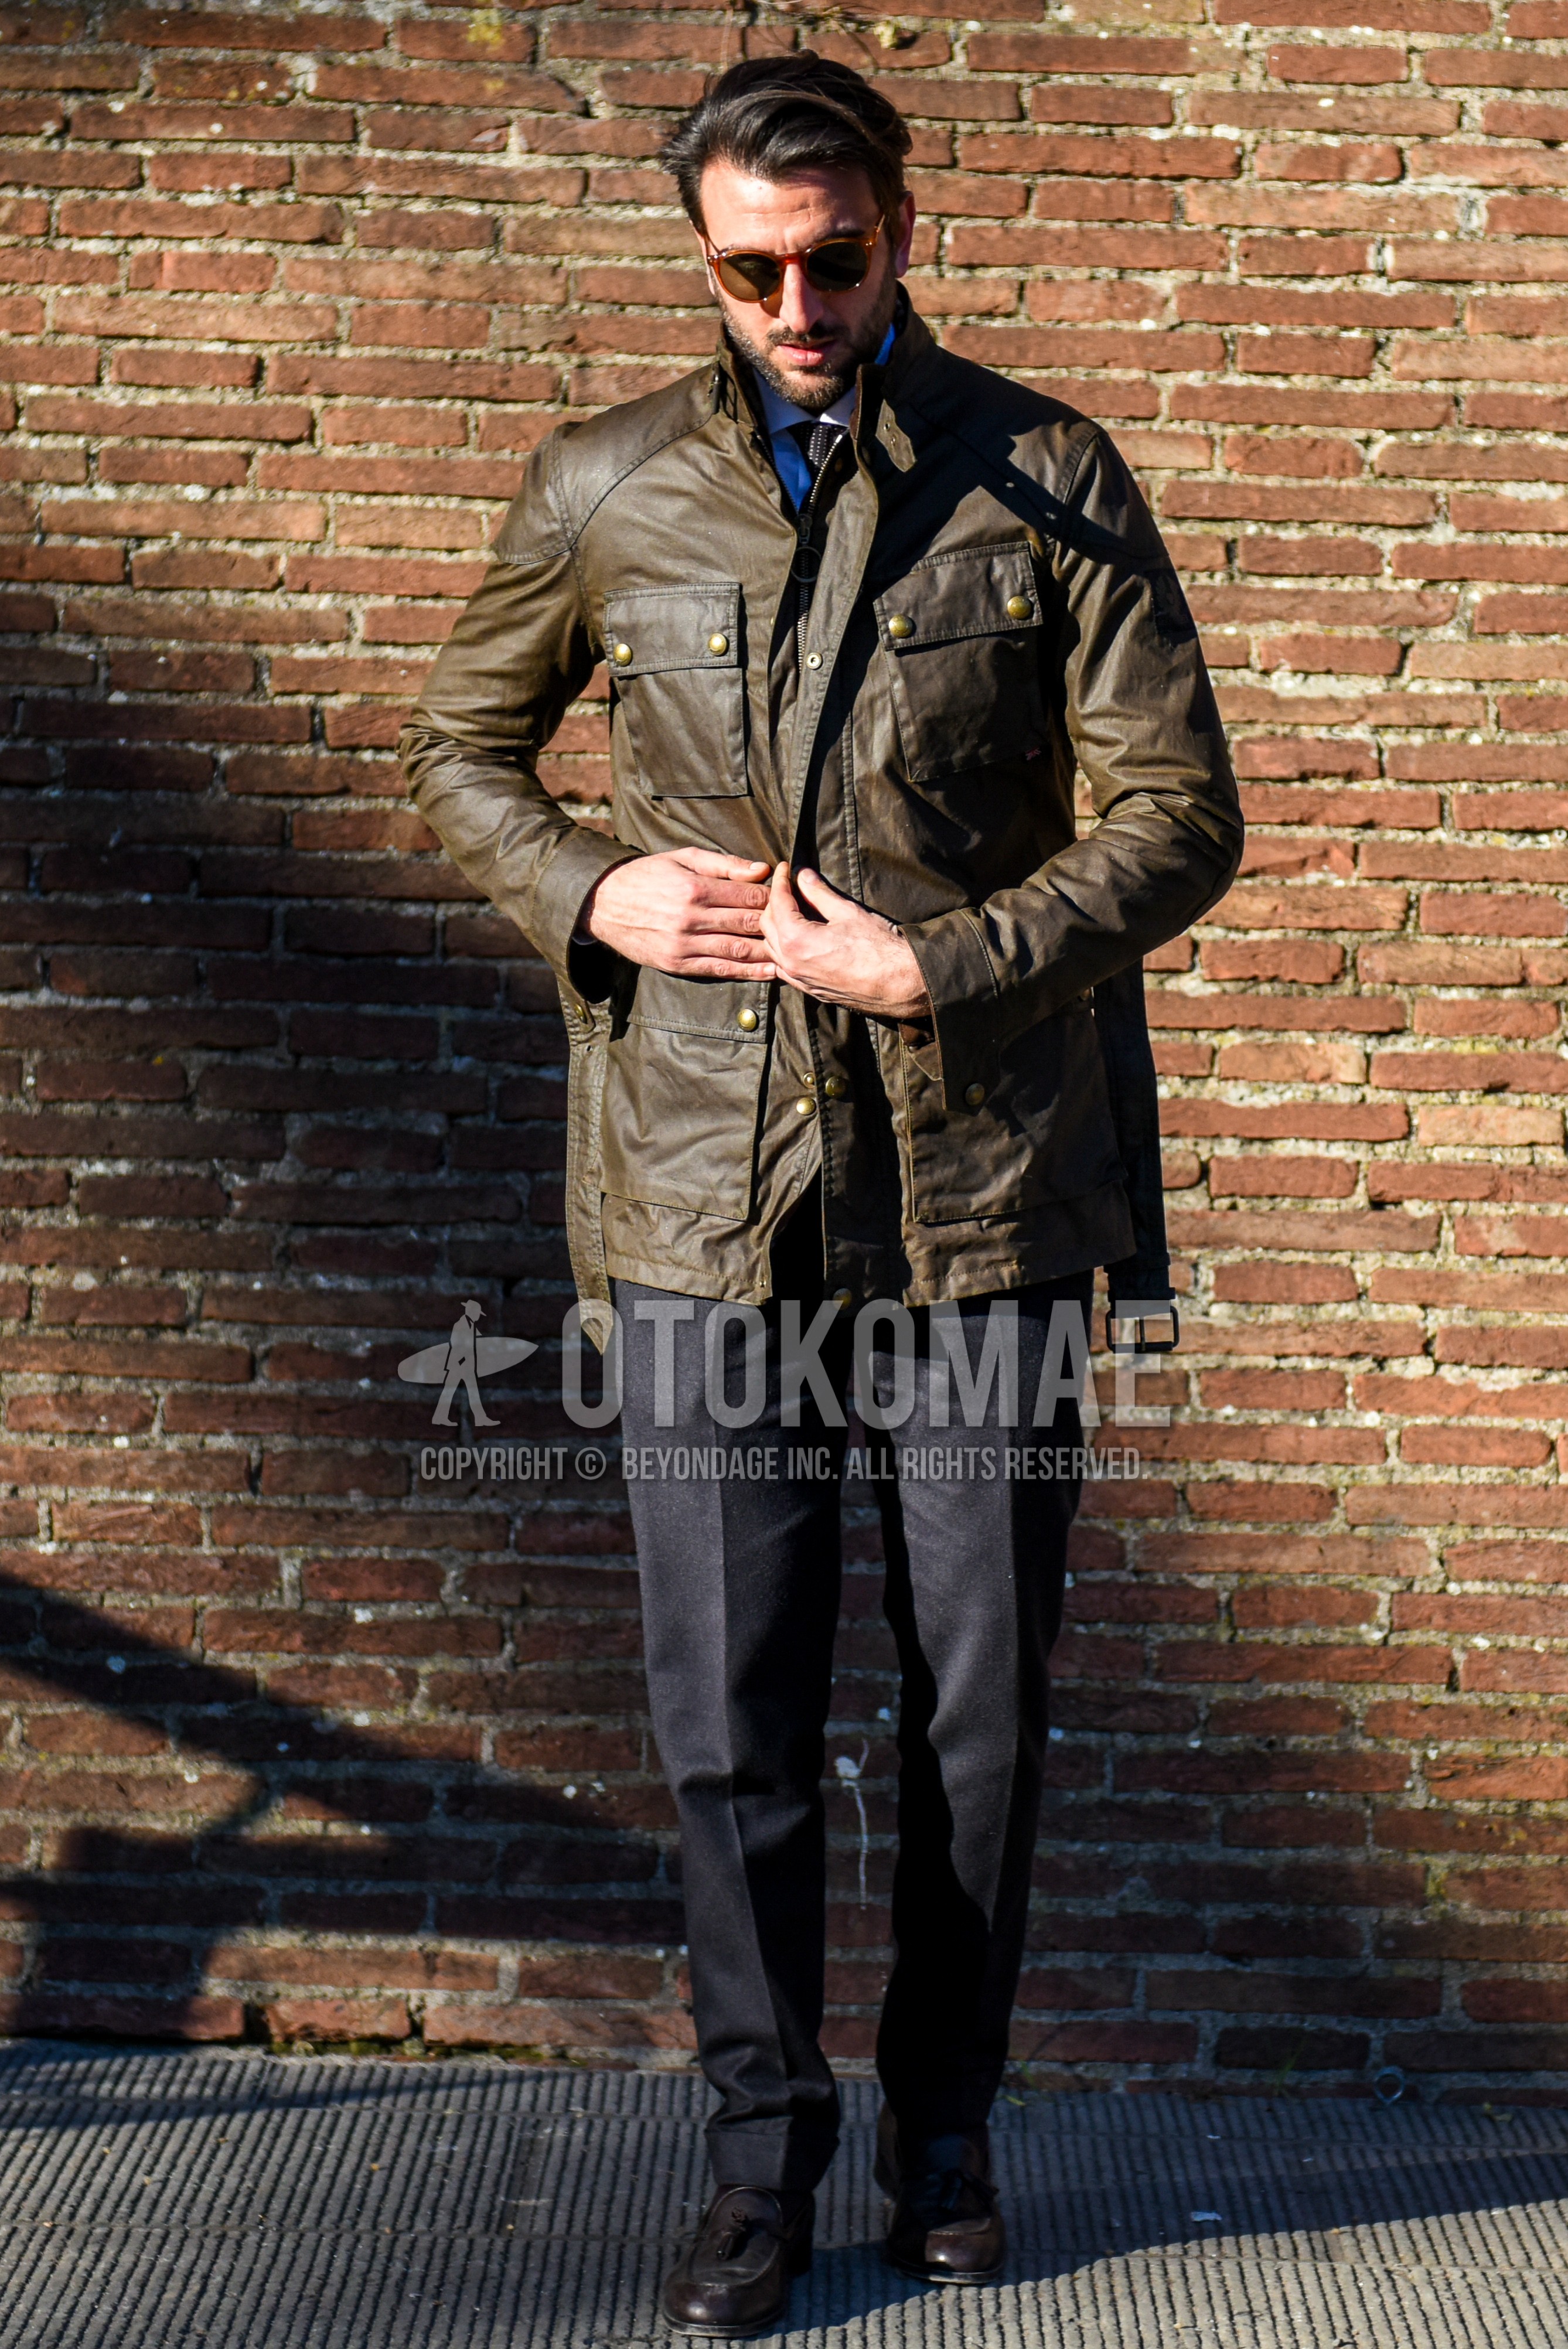 Men's winter outfit with plain sunglasses, brown plain field jacket/hunting jacket, black plain slacks, brown tassel loafers leather shoes.